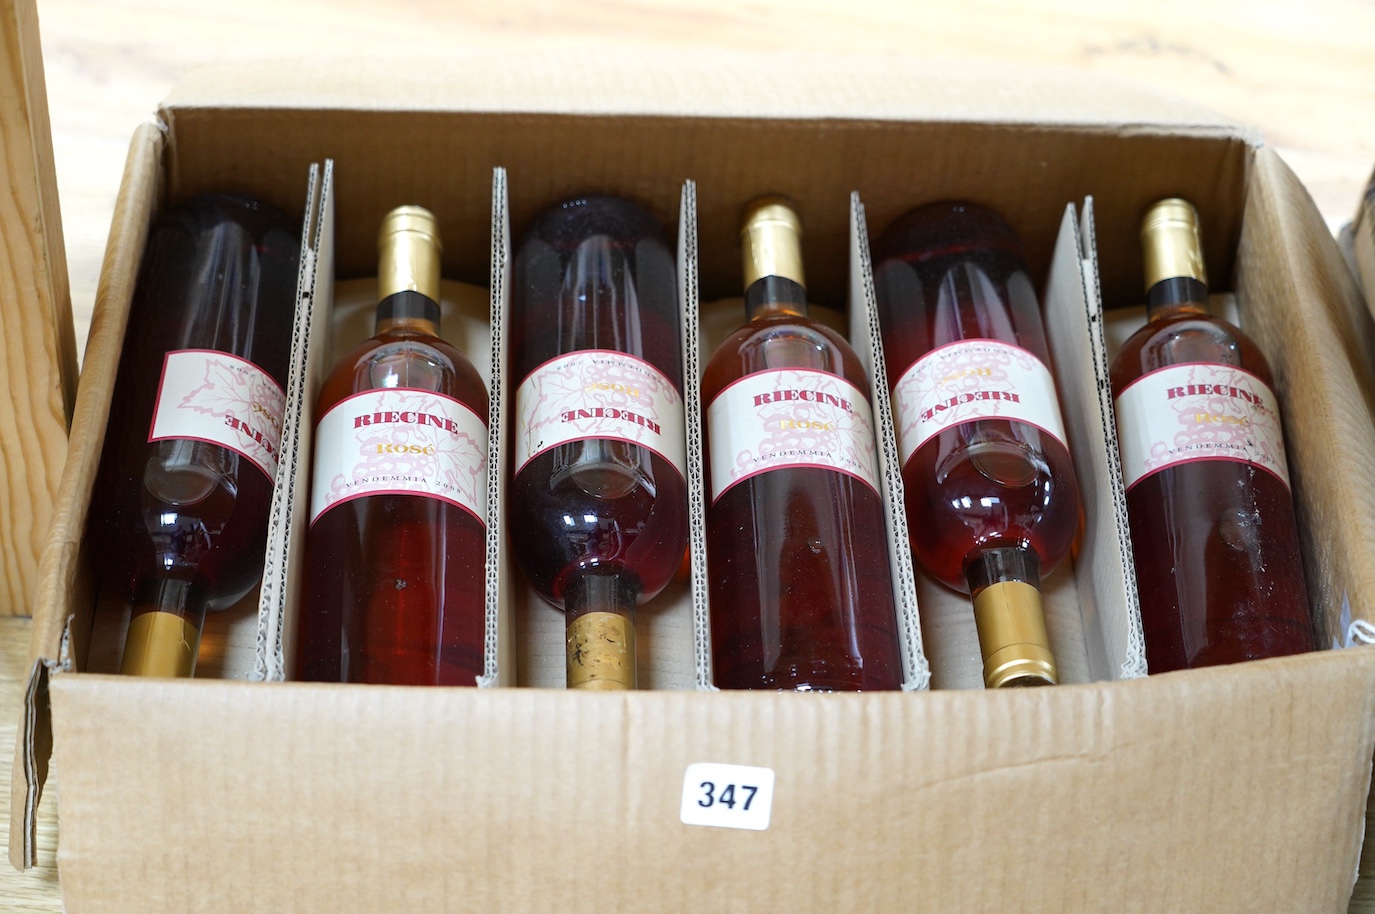 Twelve bottles of Riecine Toscana Rosé. Condition - fair, storage history unknown